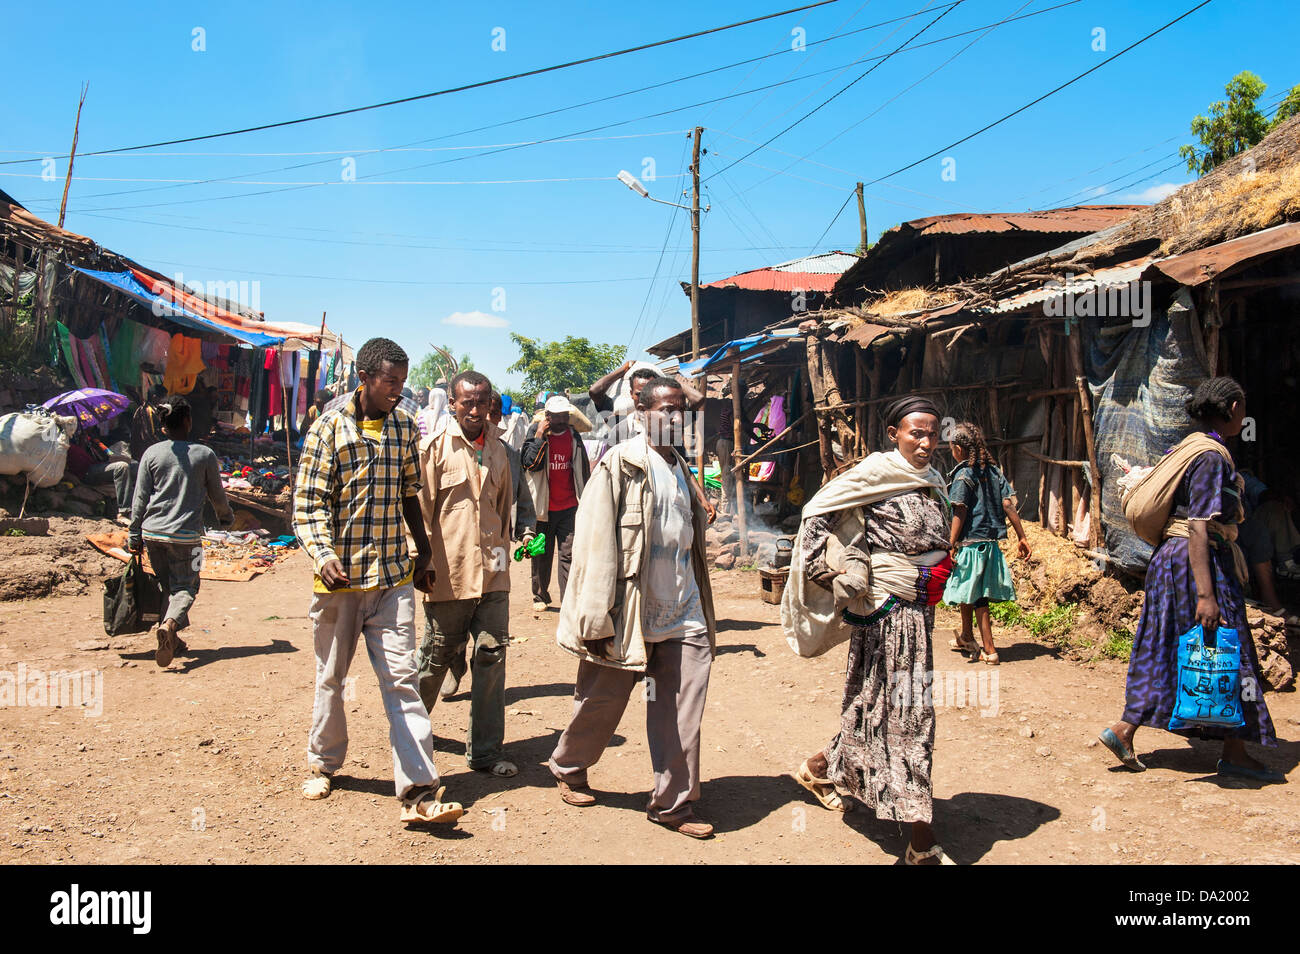 Crowded Lalibela market, Amhara region, Northern Ethiopia Stock Photo